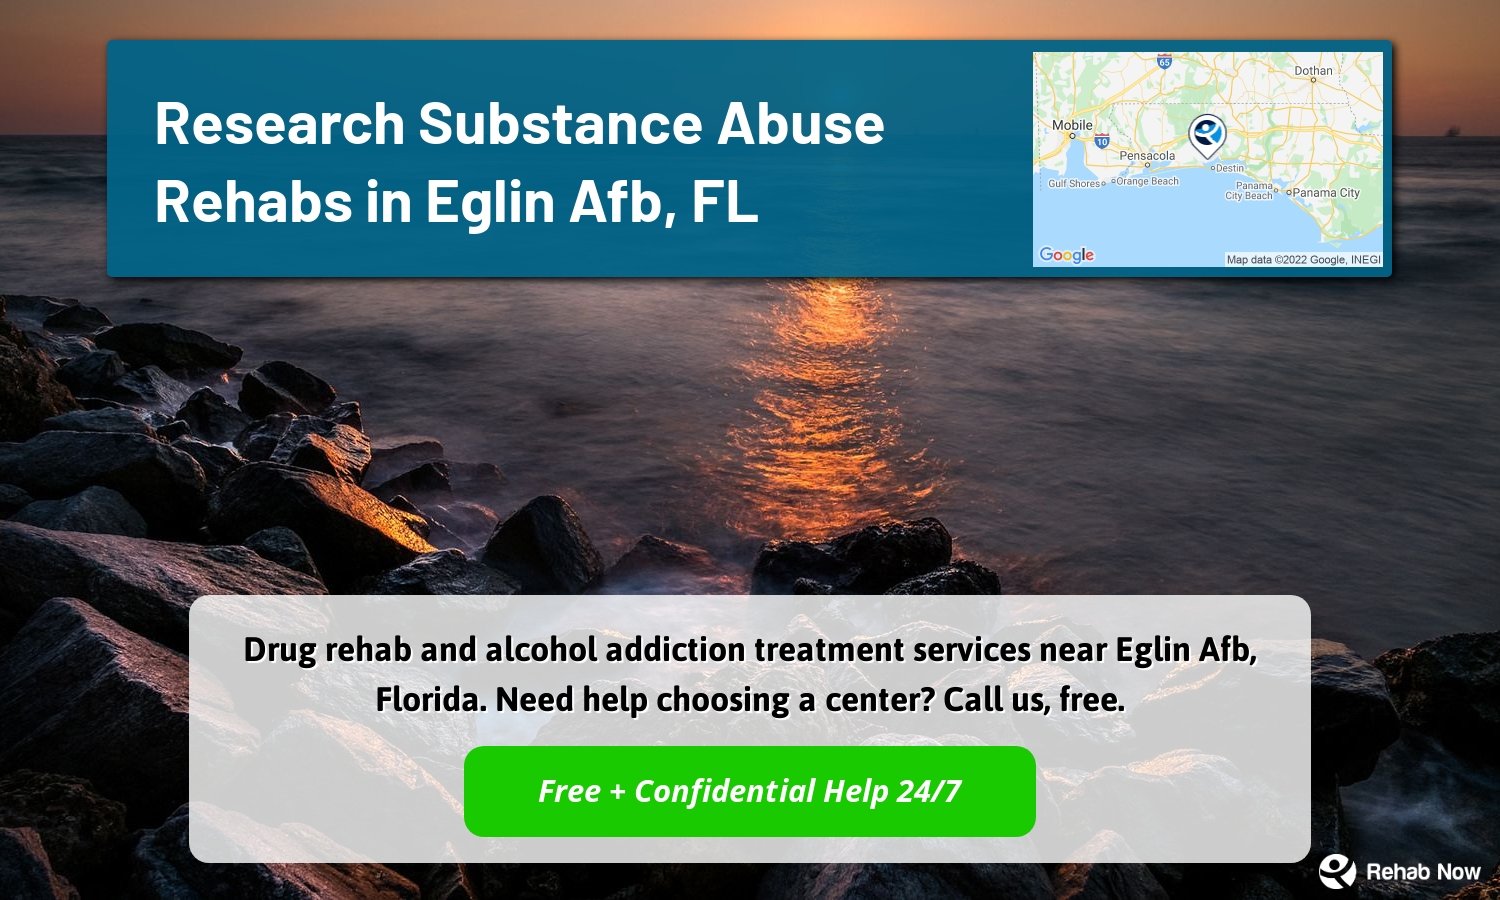 Drug rehab and alcohol addiction treatment services near Eglin Afb, Florida. Need help choosing a center? Call us, free.